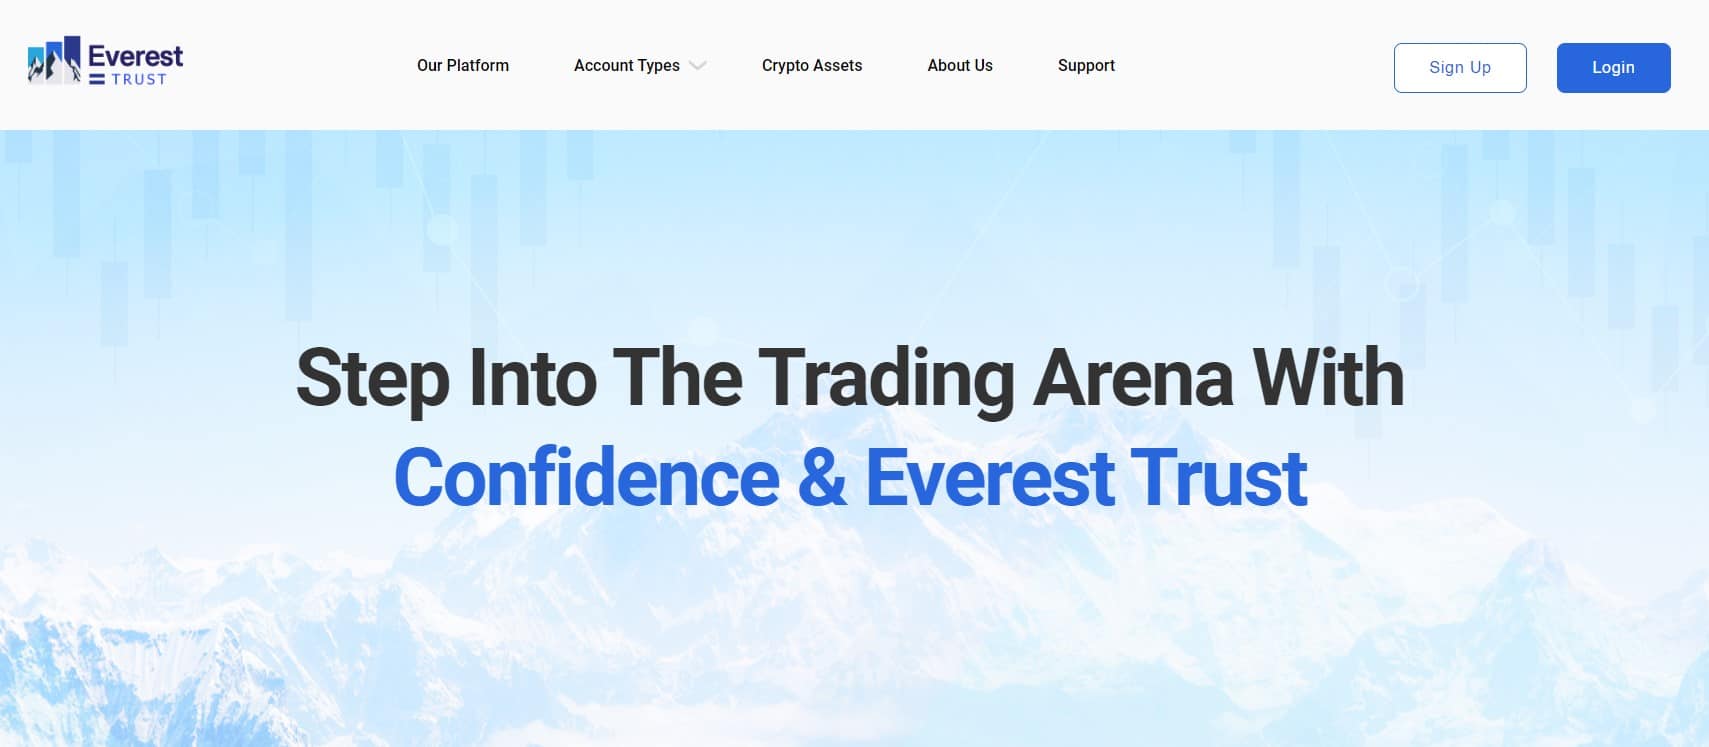 Everest Trust Trading Arena